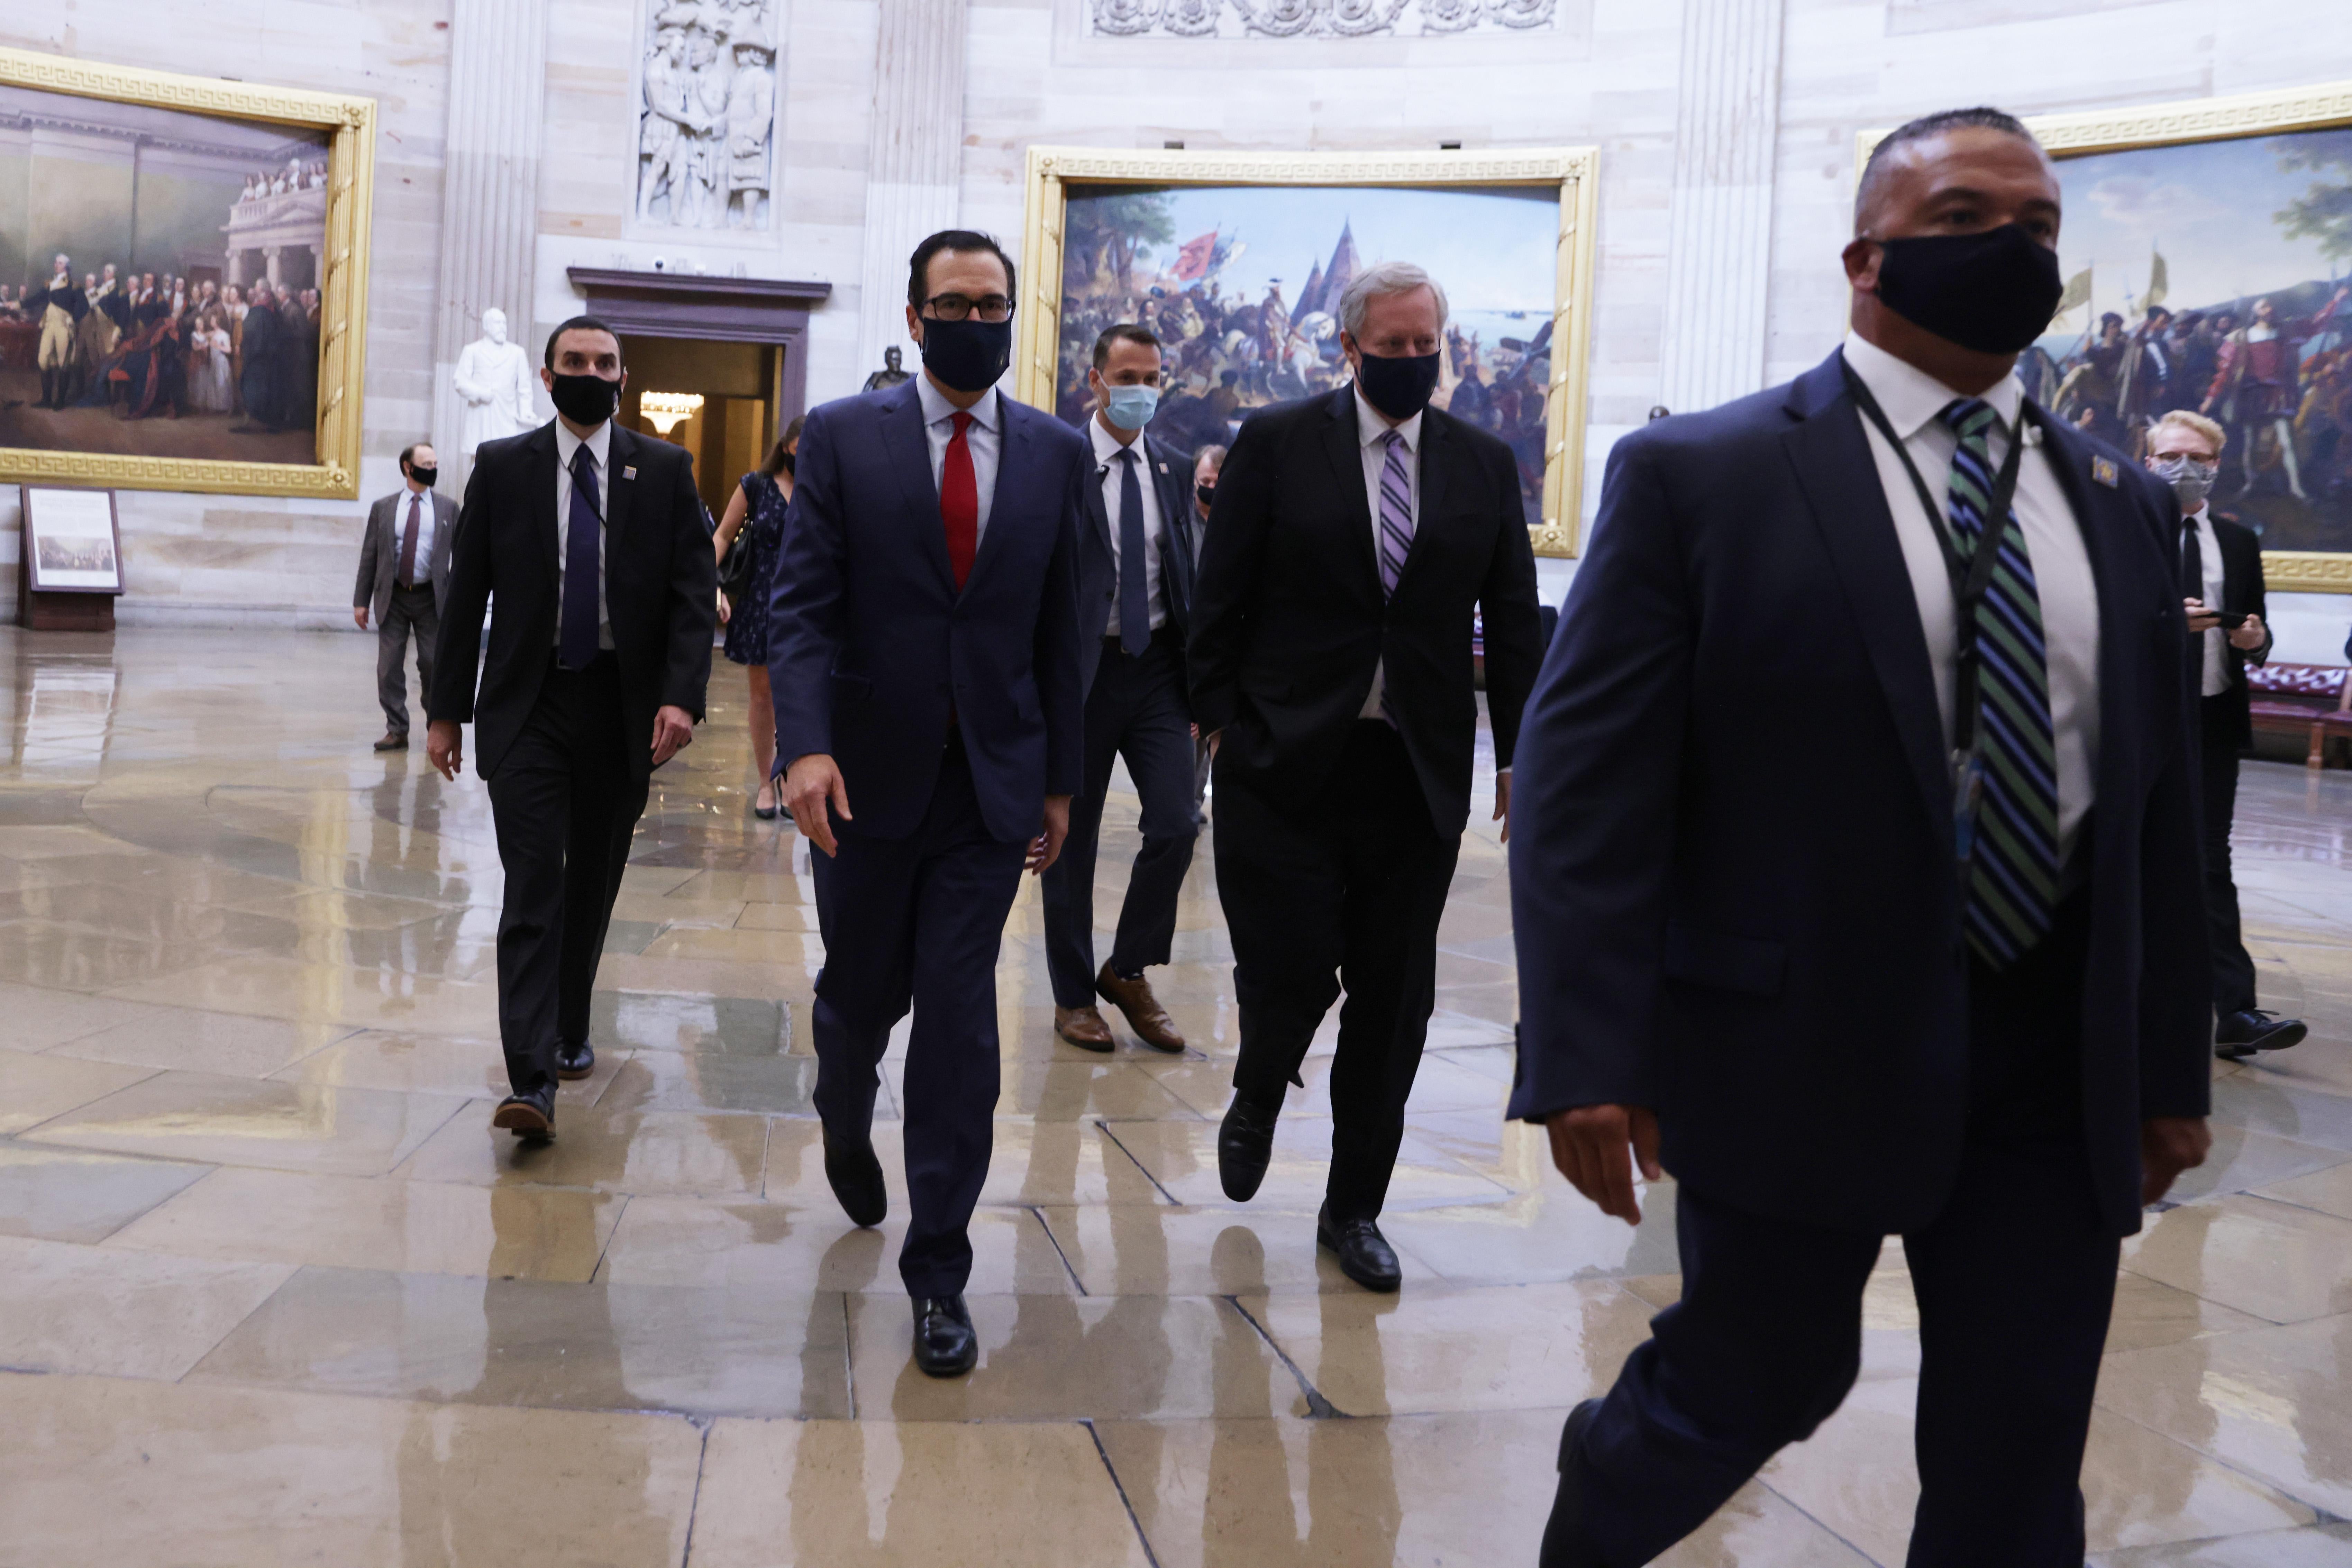 Mnuchin and Meadows walk through the Capitol.